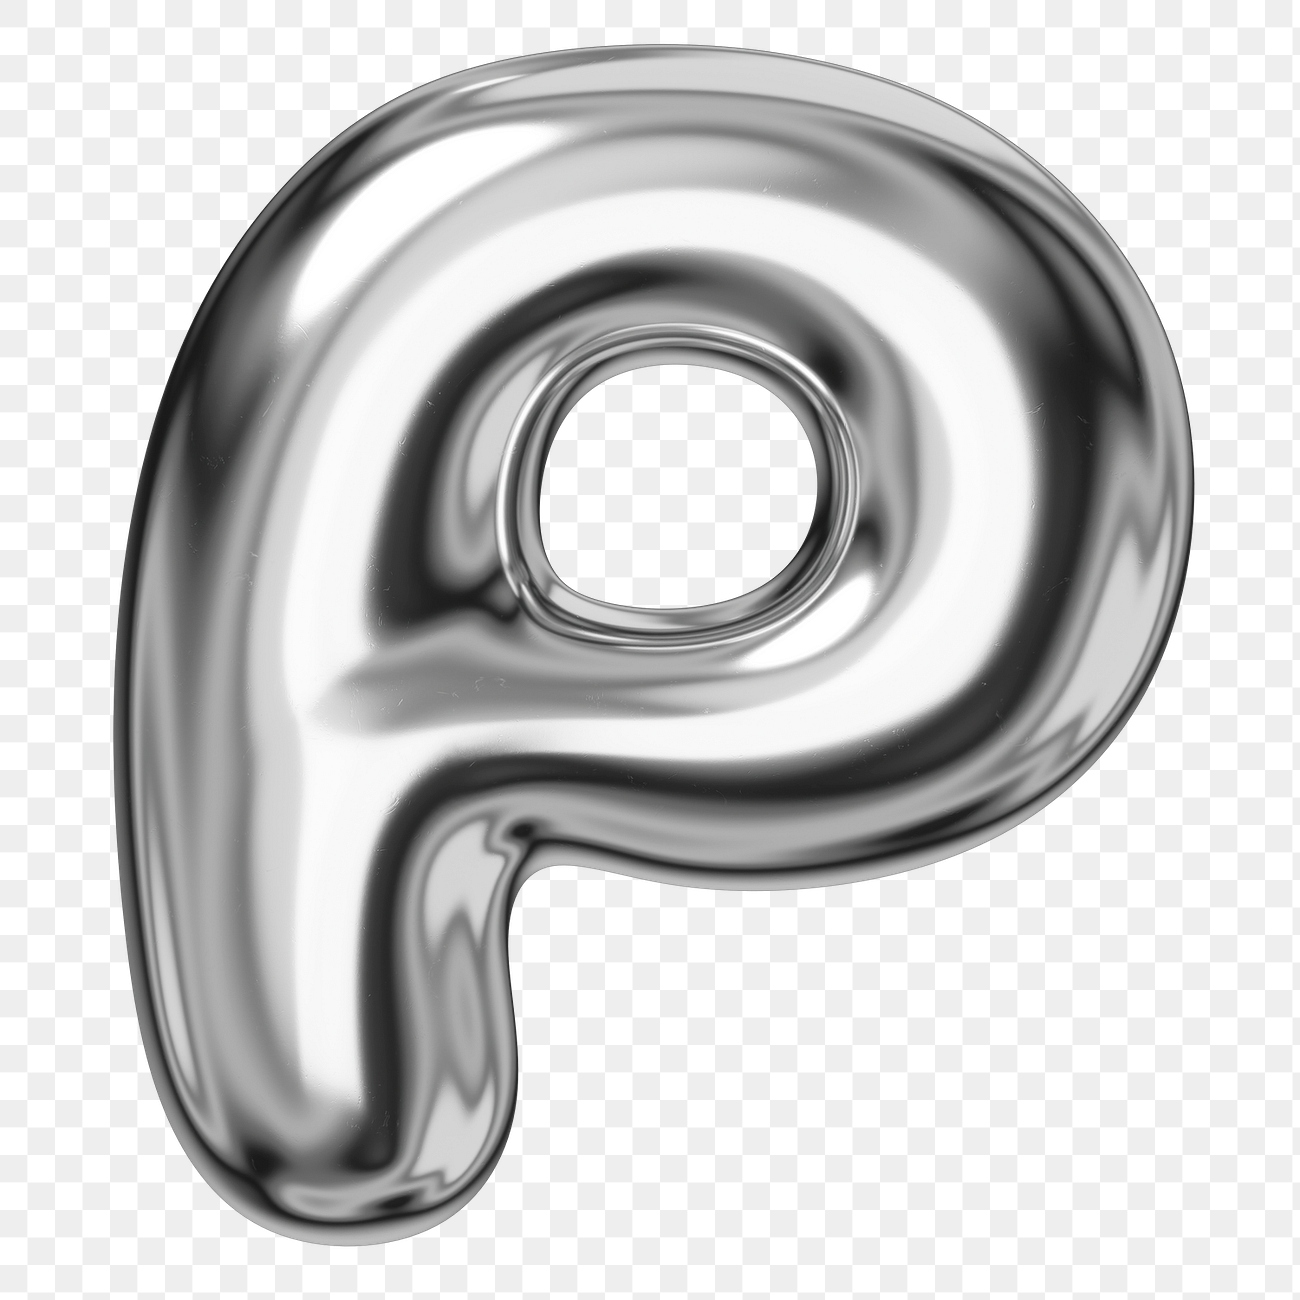 P alphabet png sticker, 3D | Premium PNG - rawpixel